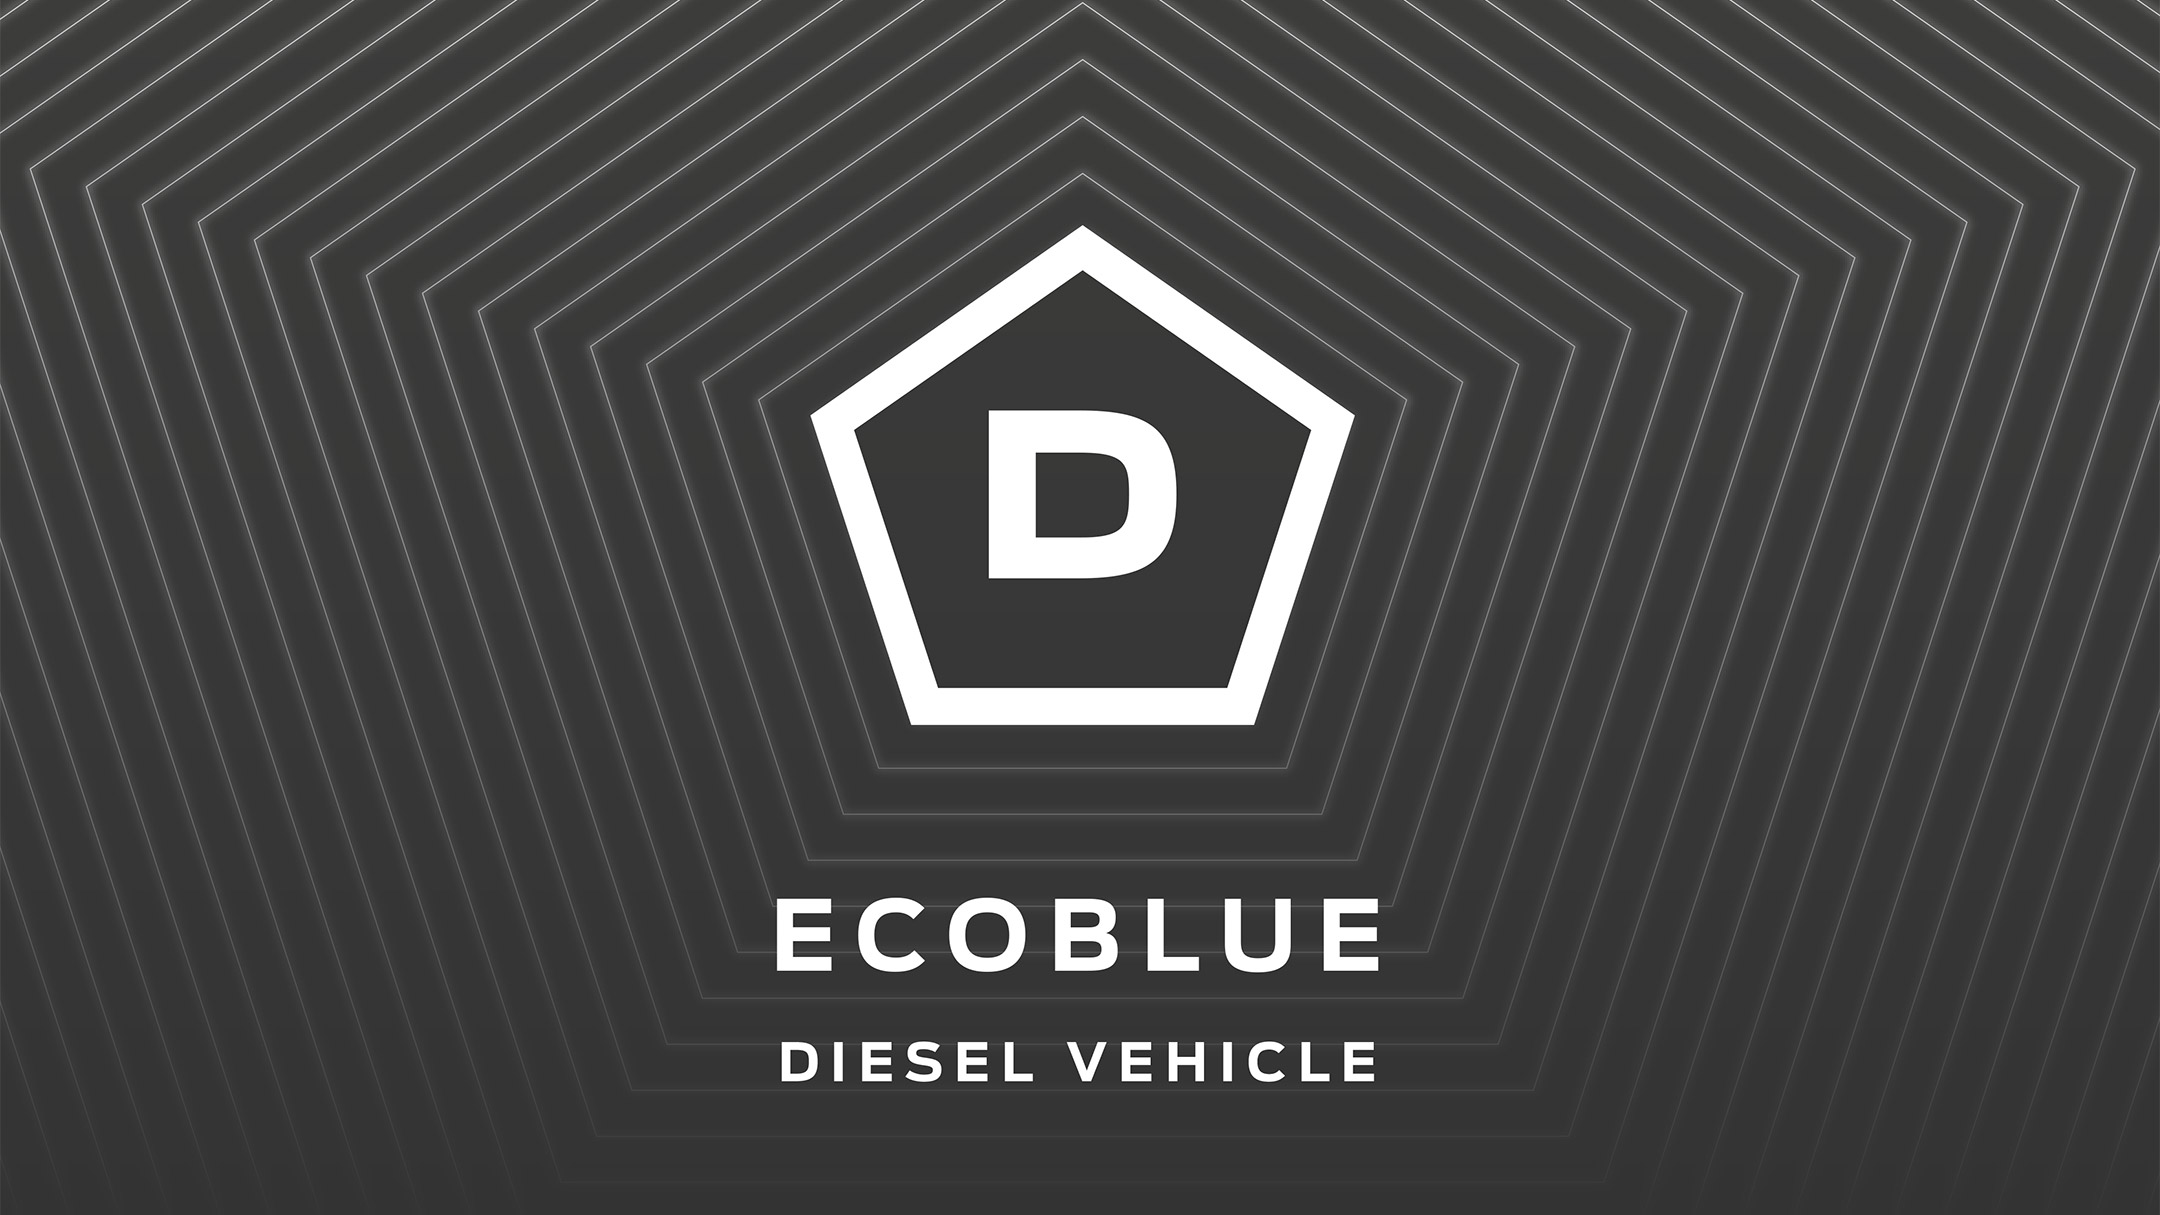 EcoBlue diesel icon